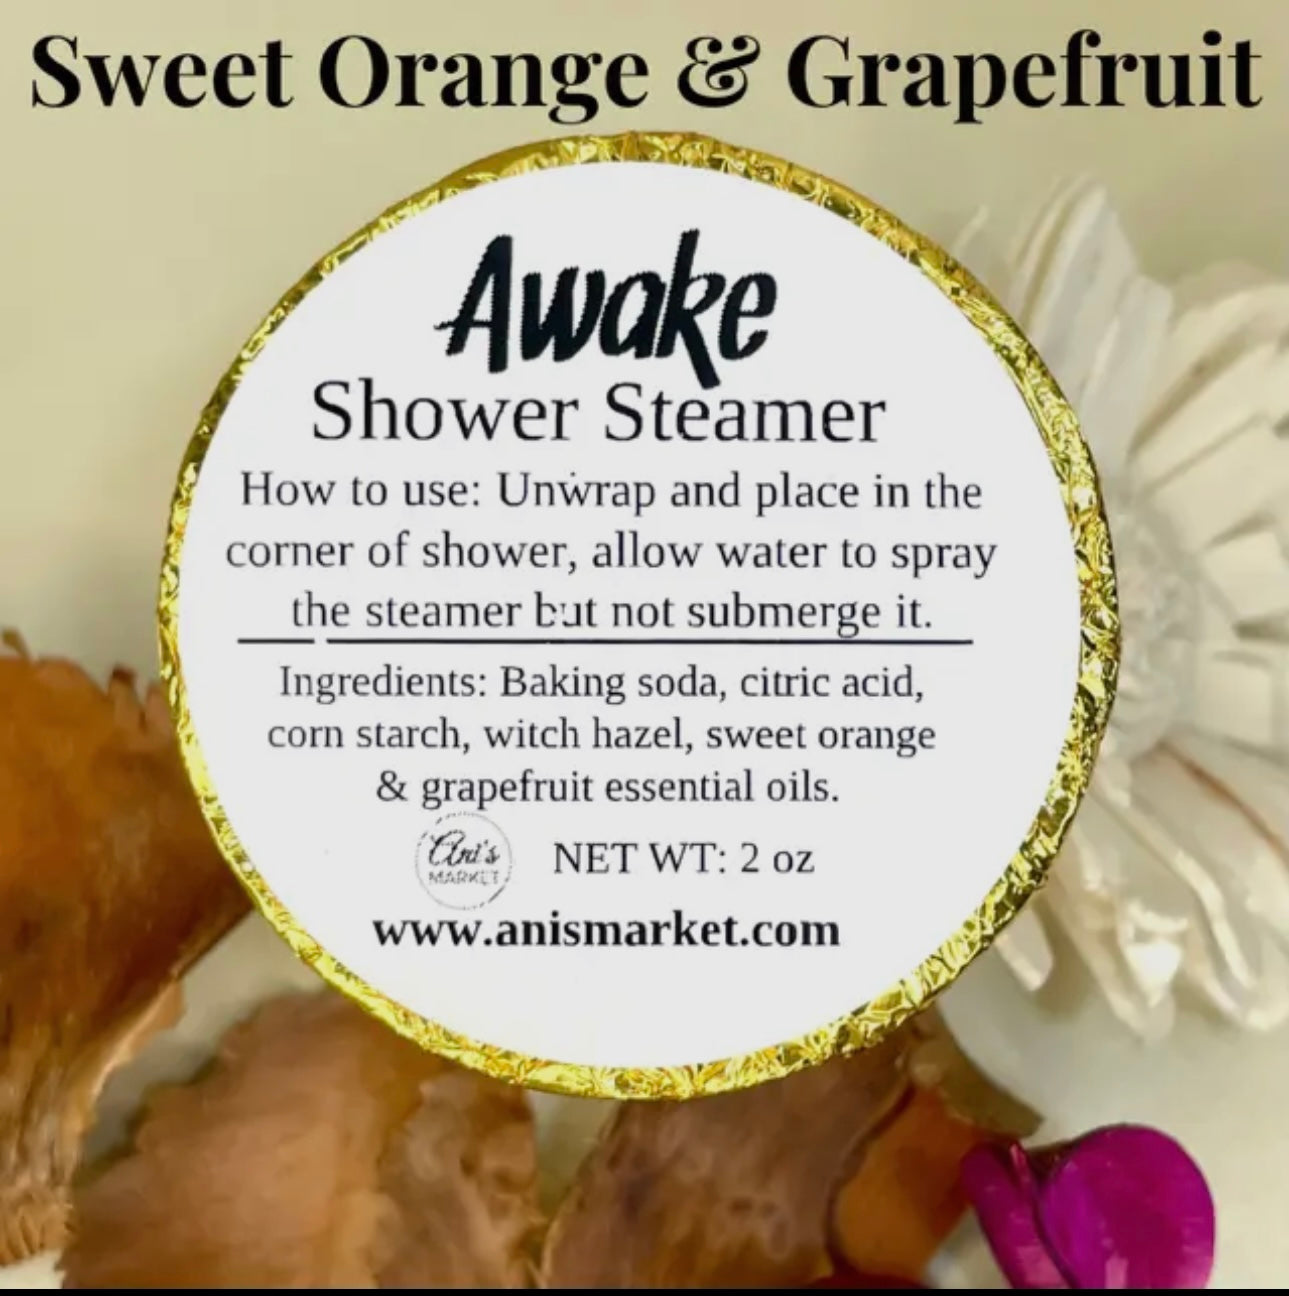 Sweet orange and grapefruit shower steamer